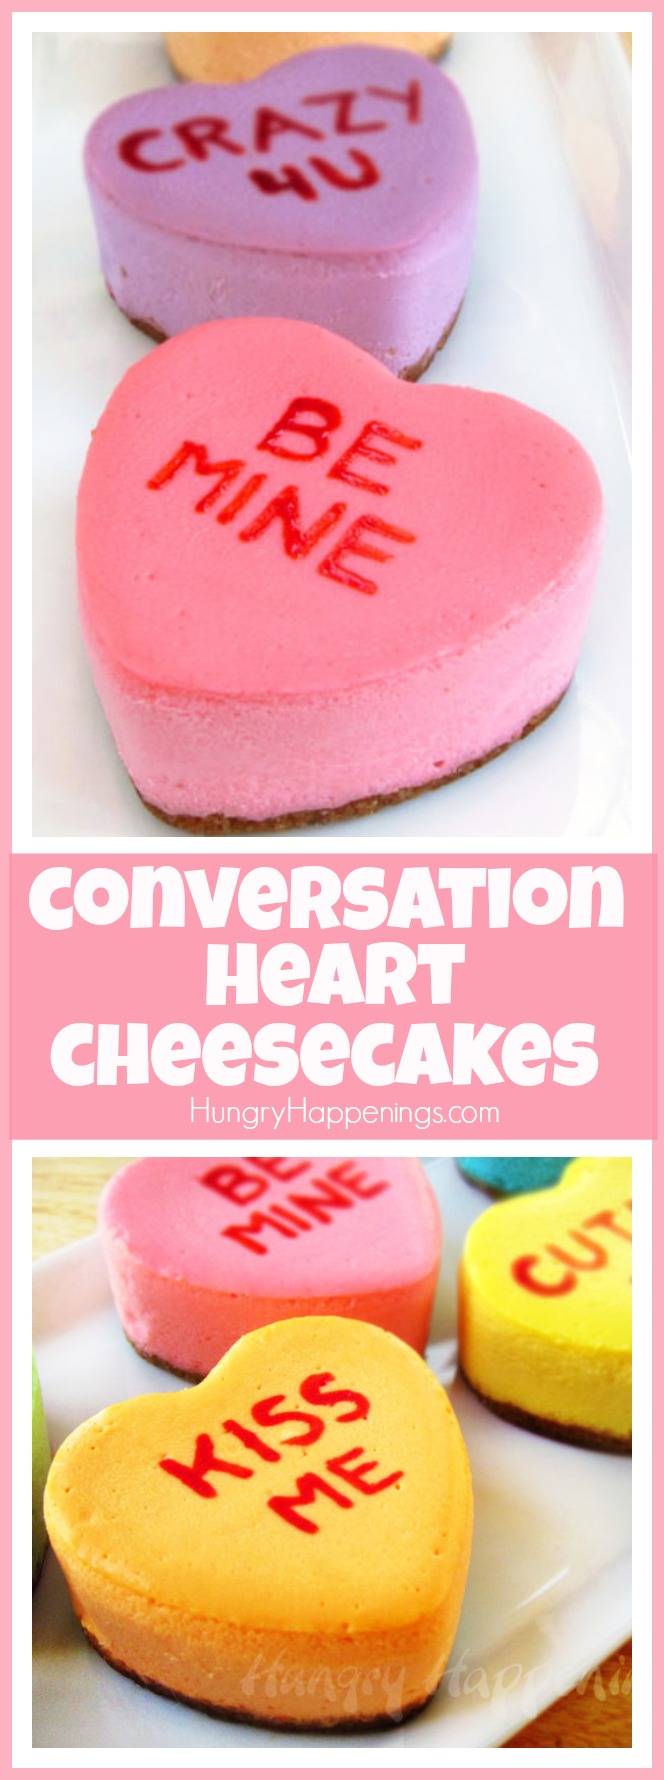 18-conversation-heart-cheesecakes